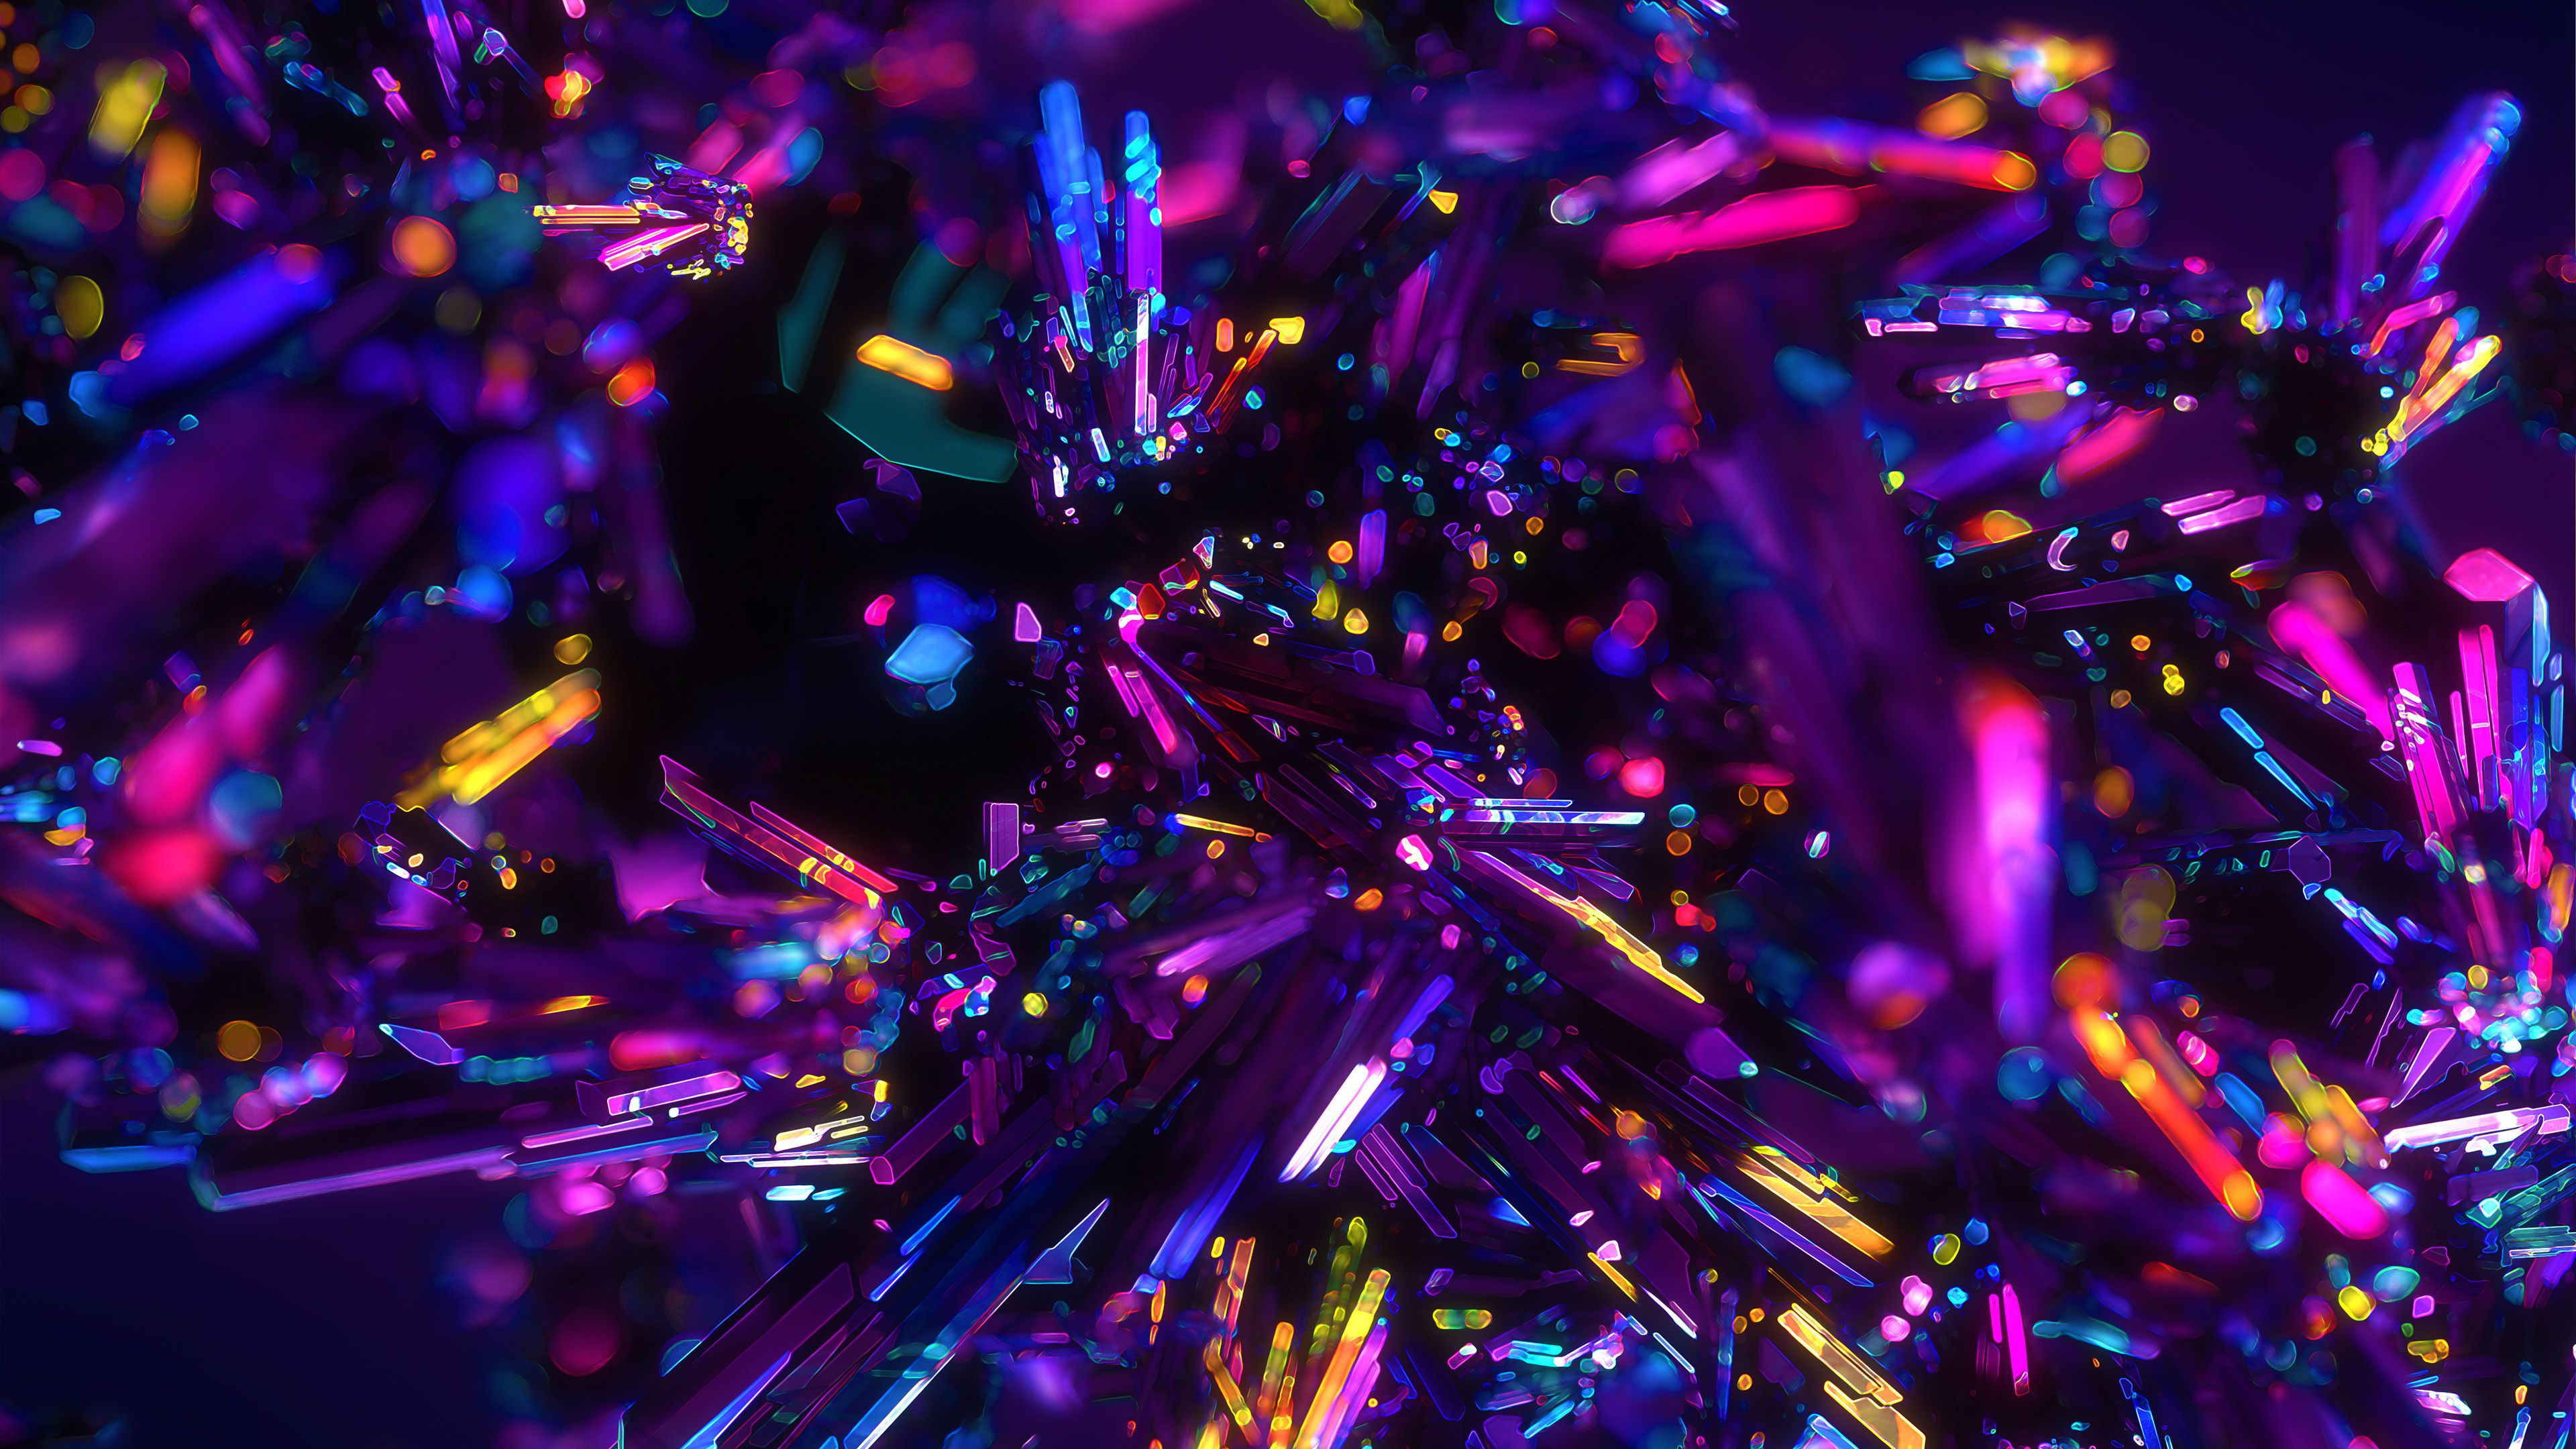 Colorful Crystals Abstract 4K Wallpaper